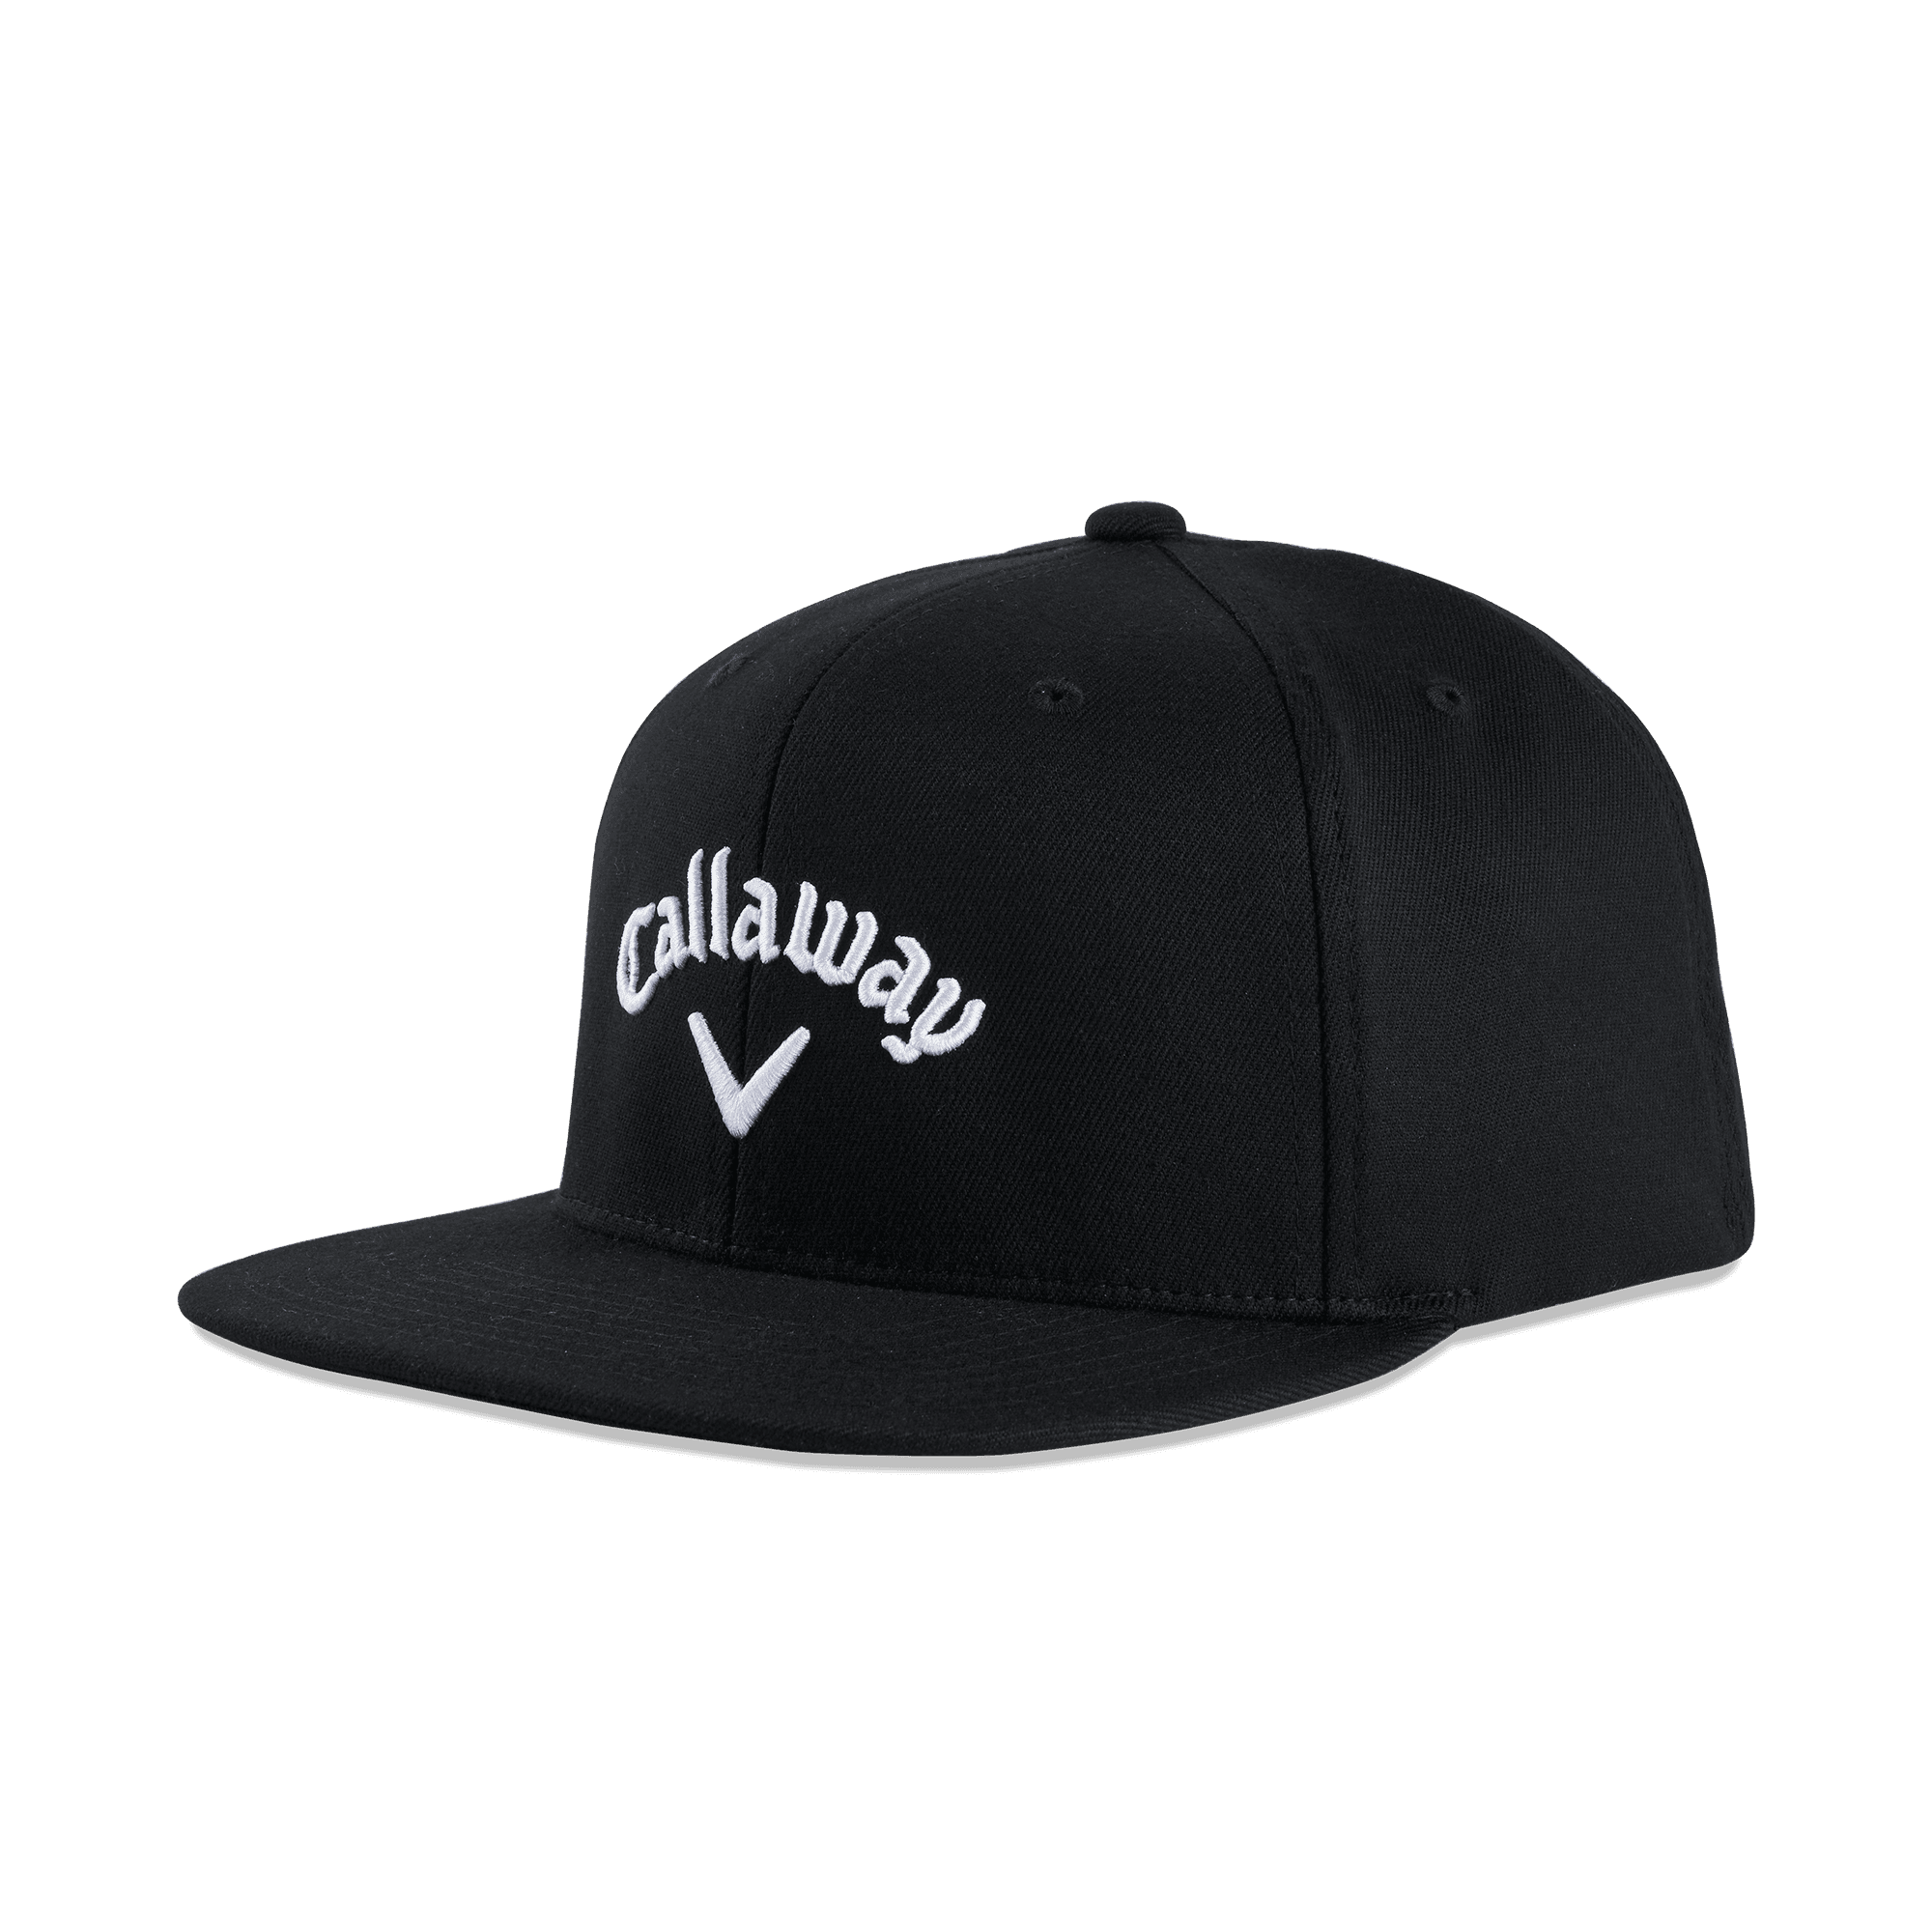 Callaway Men's Flat Bill Golf Hat, Black